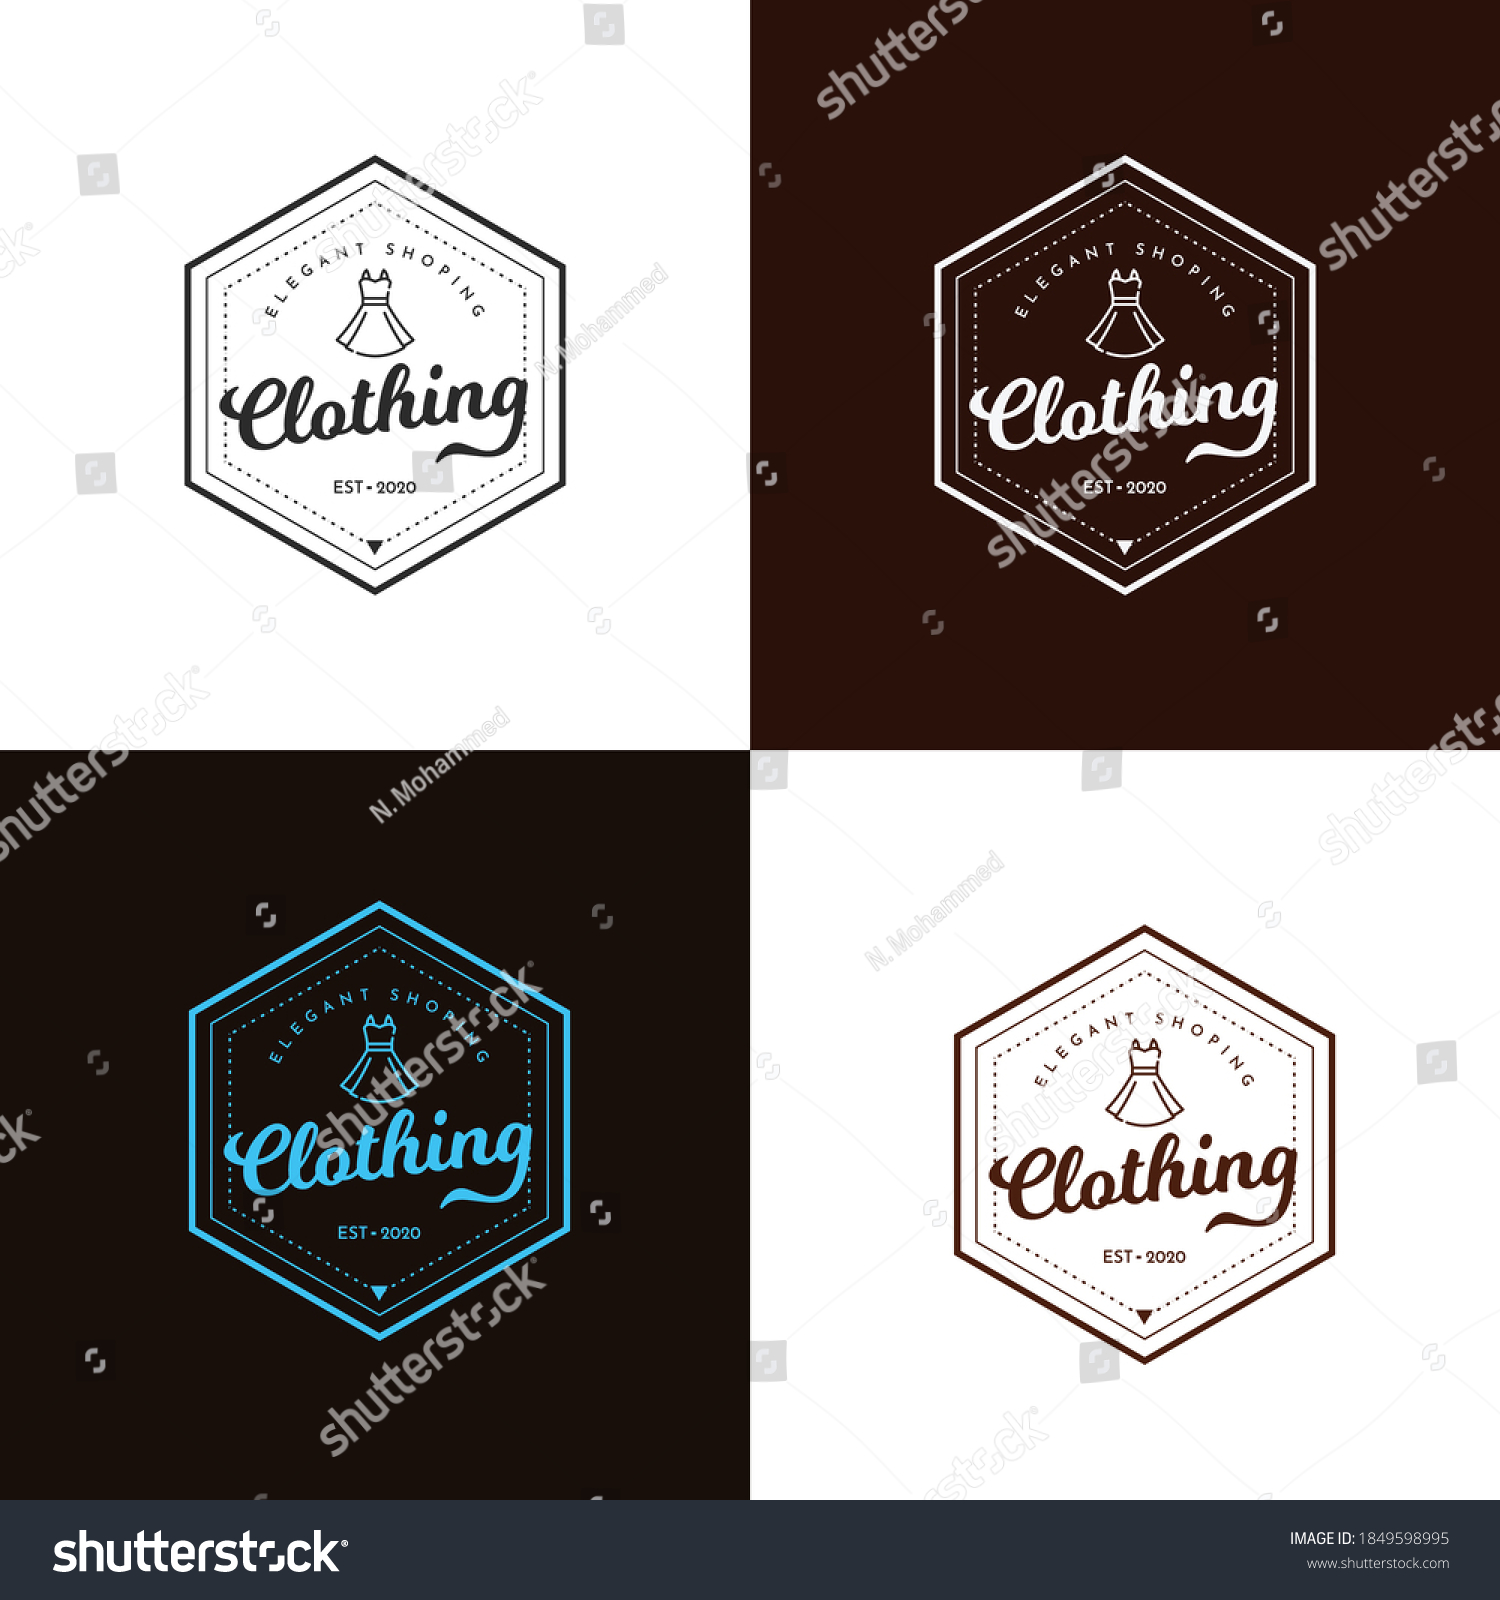 Emblem Clothing Brand Vector Logo Design Stock Vector (Royalty Free ...